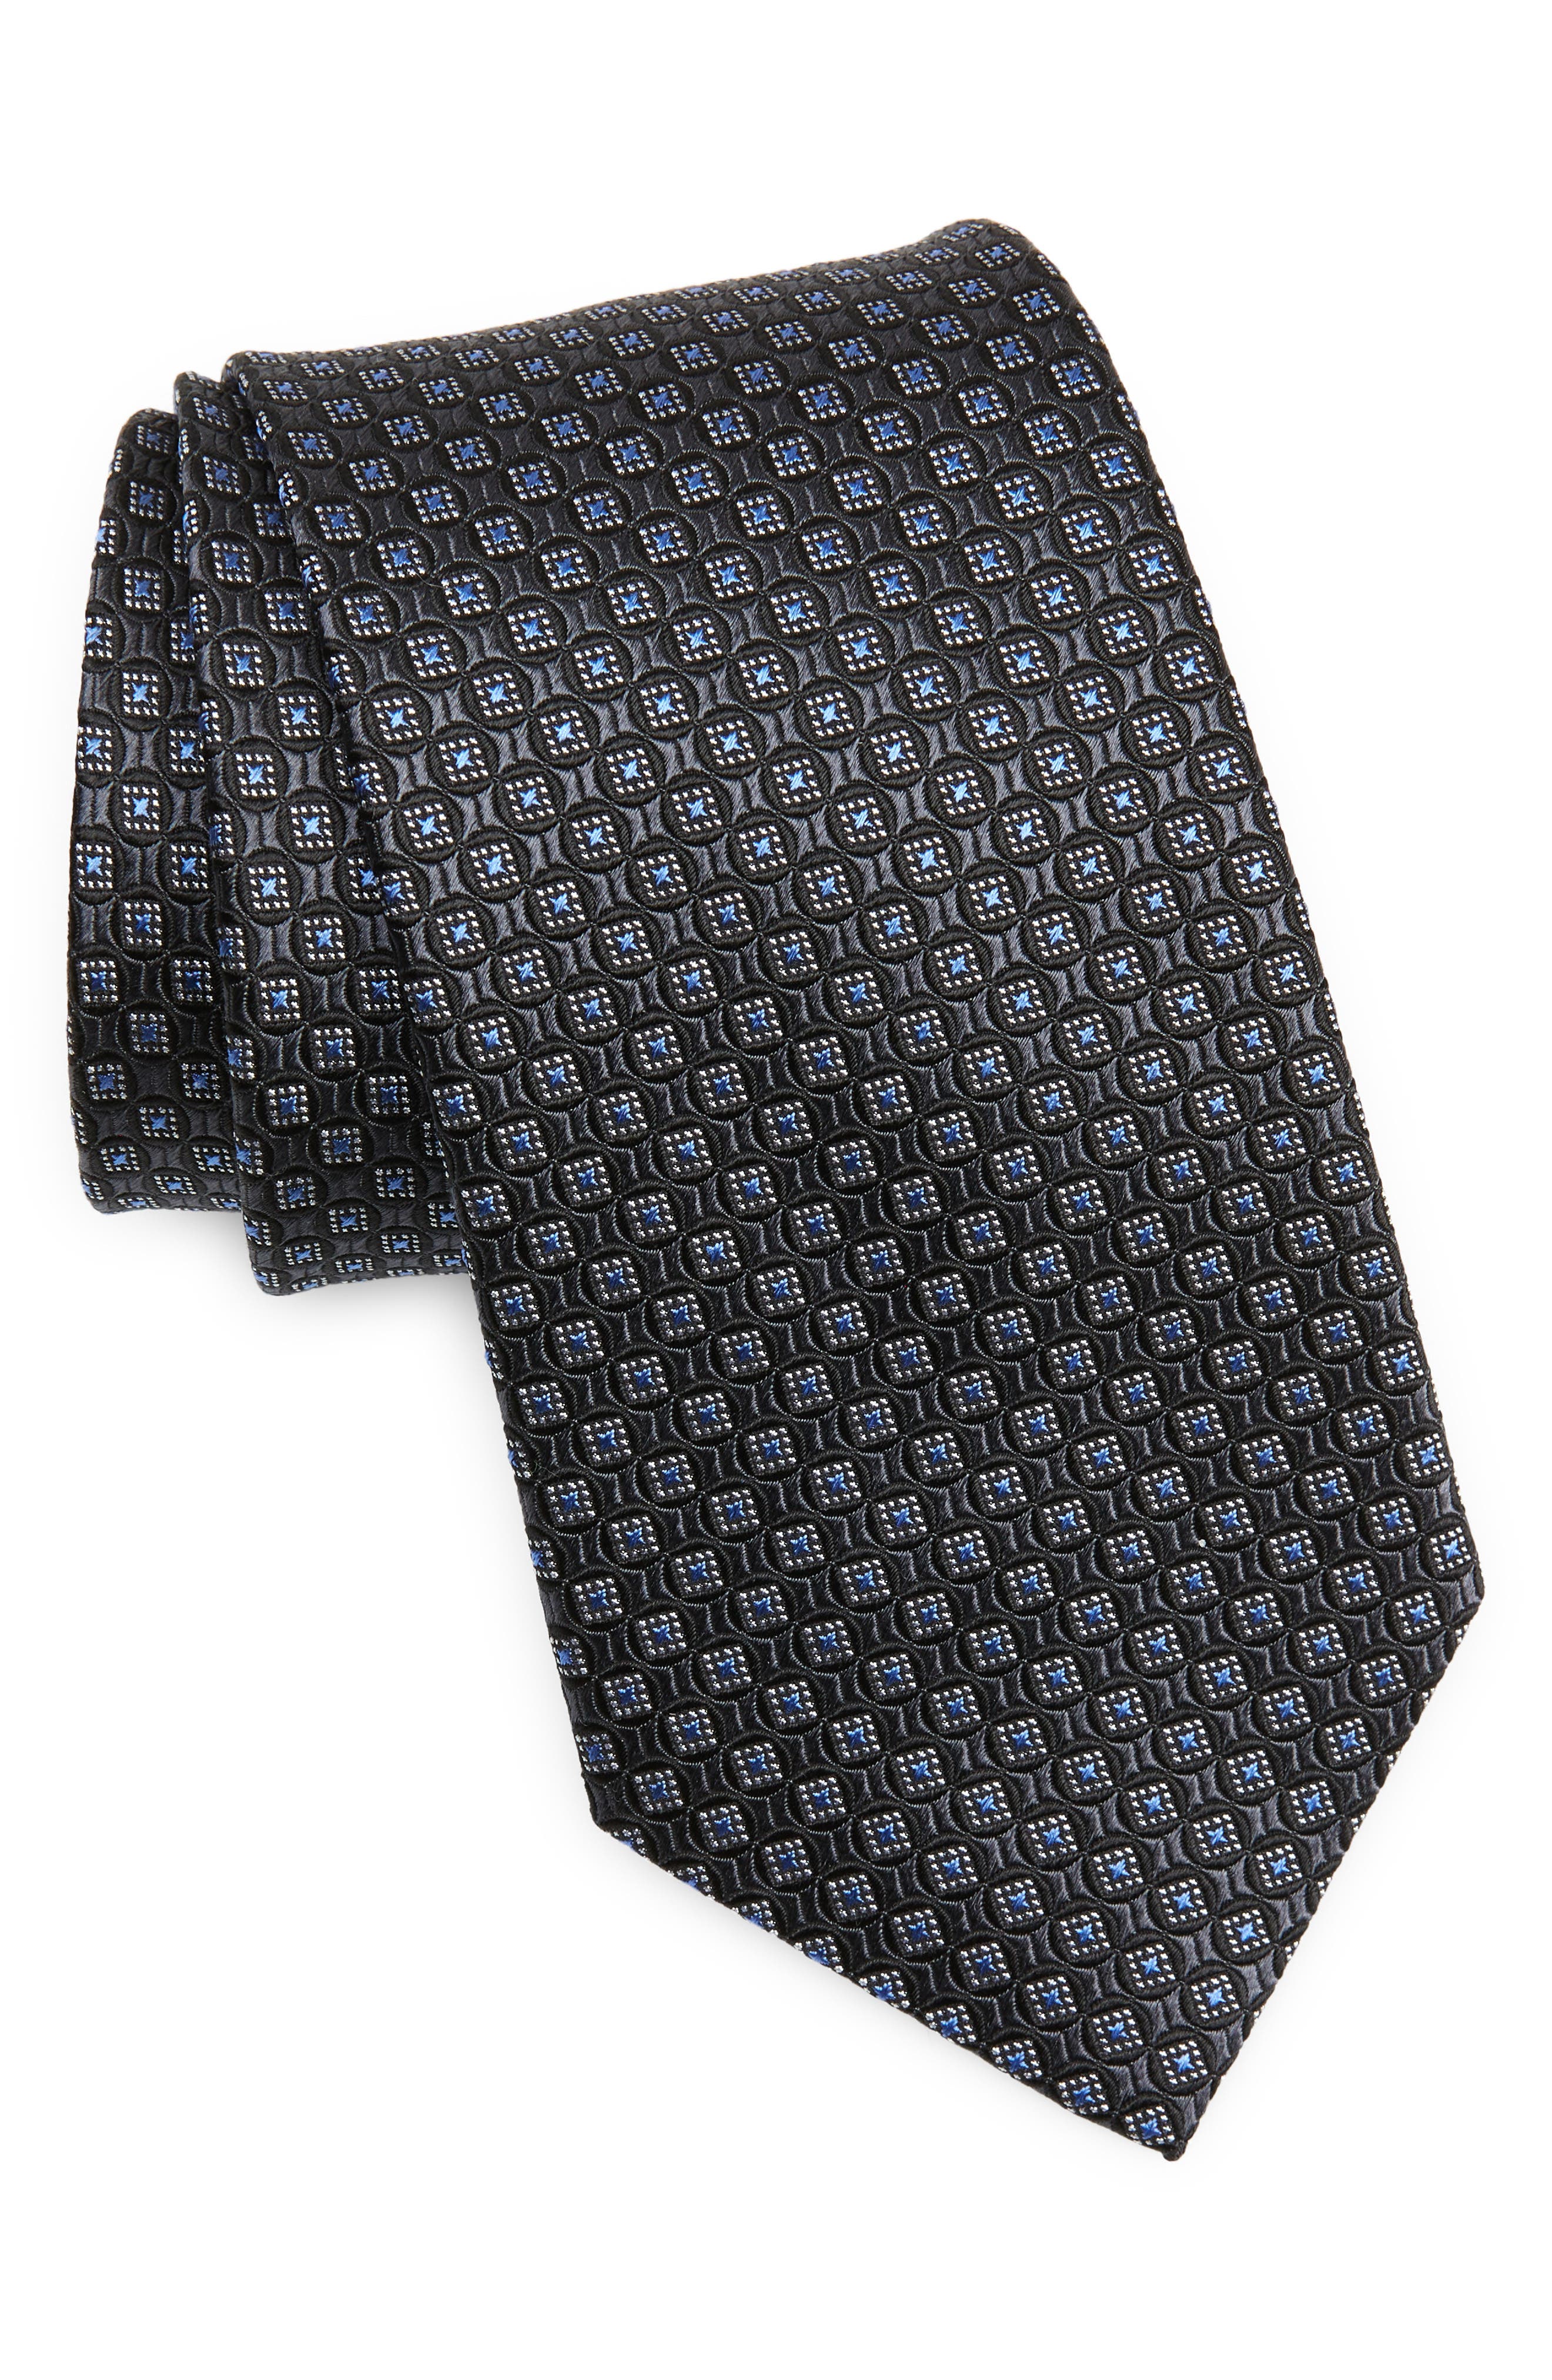 DOLCE & GABBANA Tie Black Blue Silk Knitted Classic Necktie Accessory RRP $200 